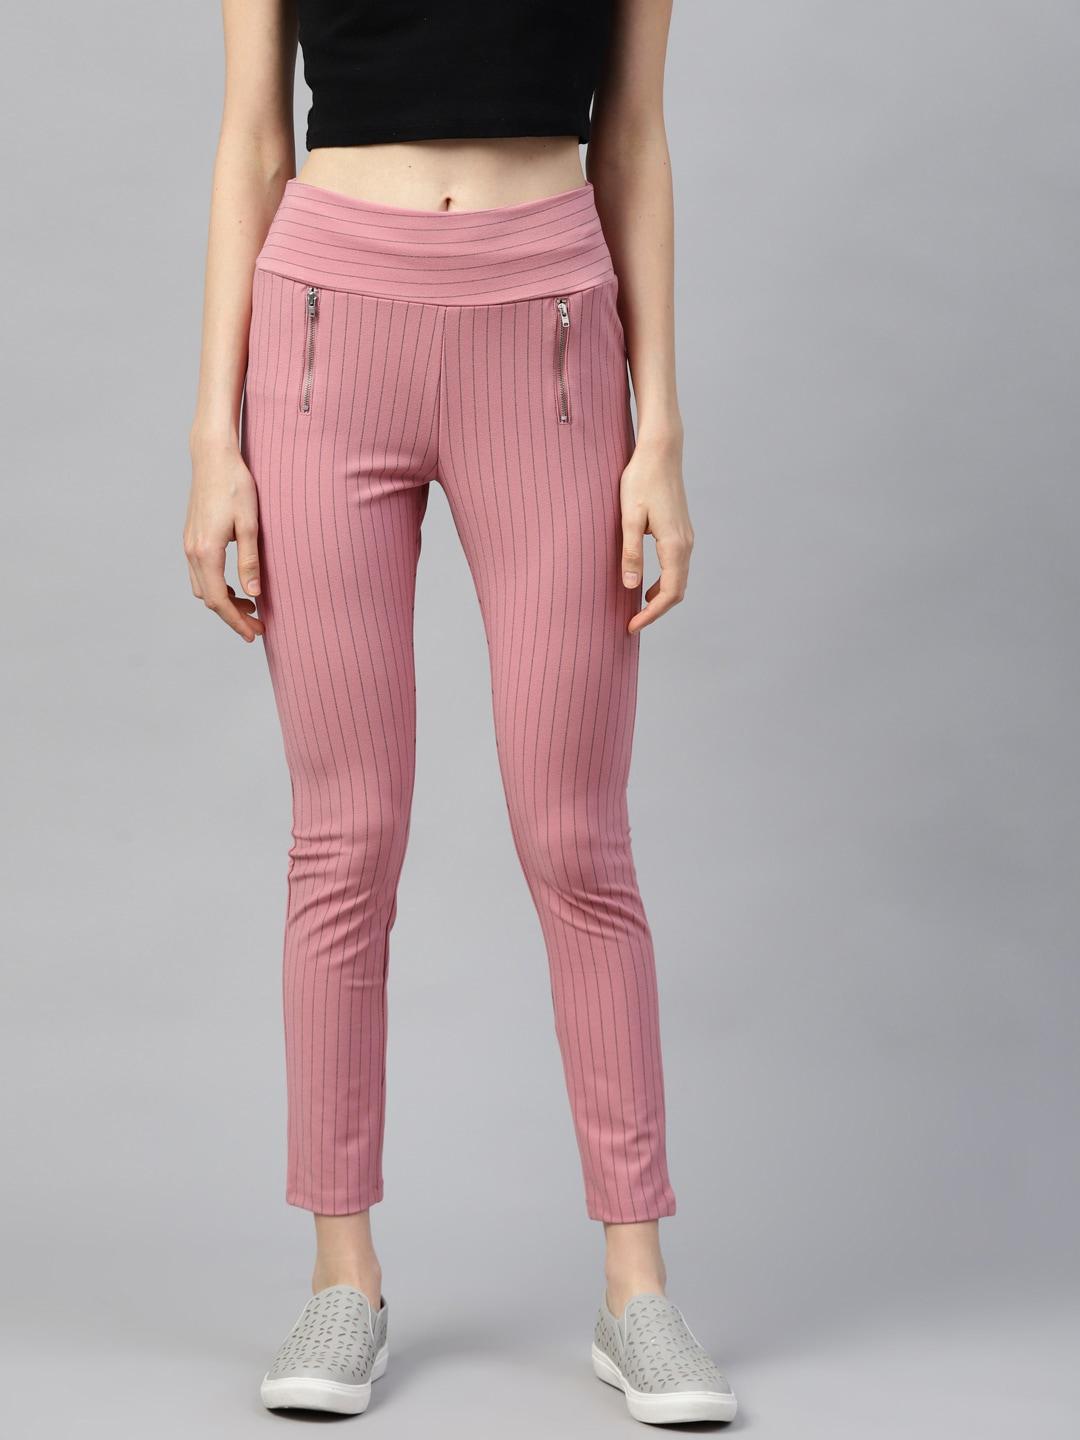 SASSAFRAS Women Pink & Black Striped Slim Fit Jeggings